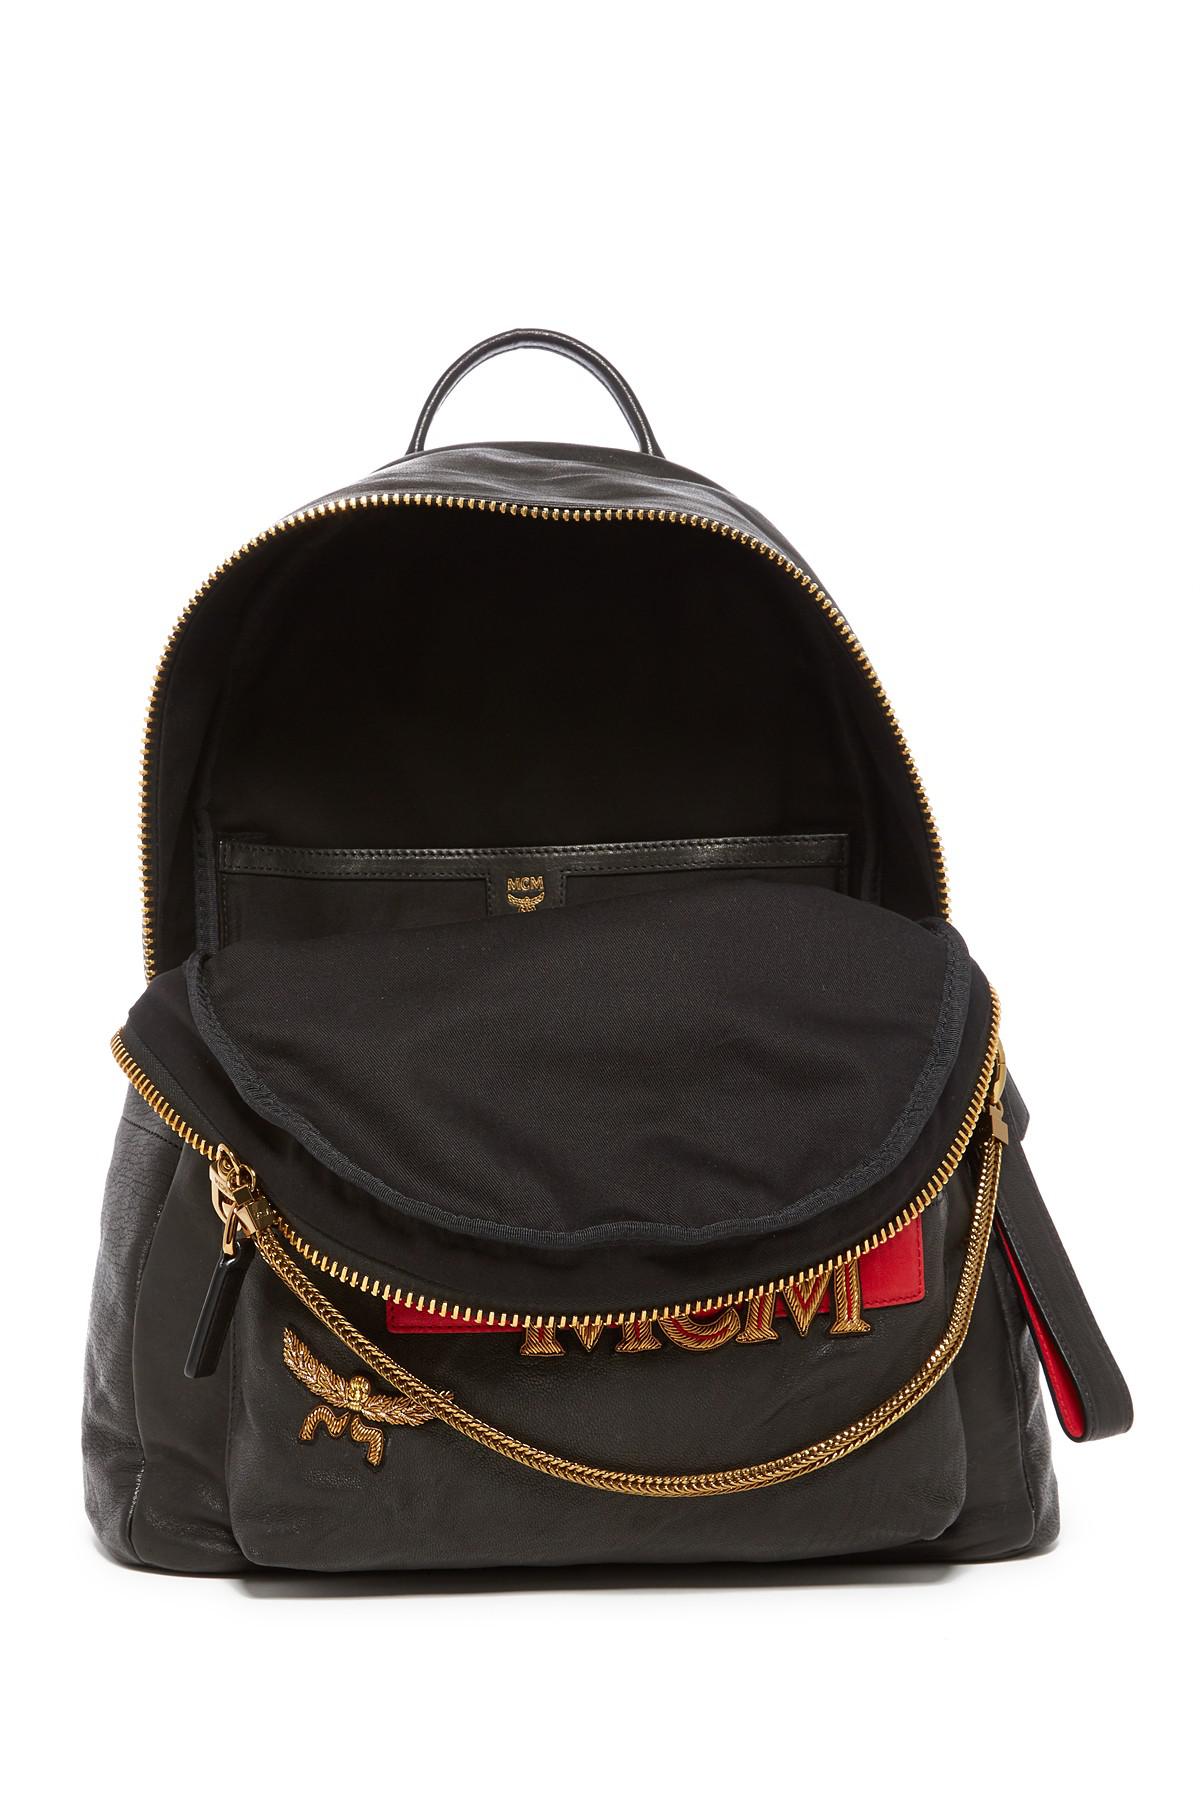 MCM Stark Leather And Genuine Fox Fur Detail Insignia Medium Backpack in Black - Lyst